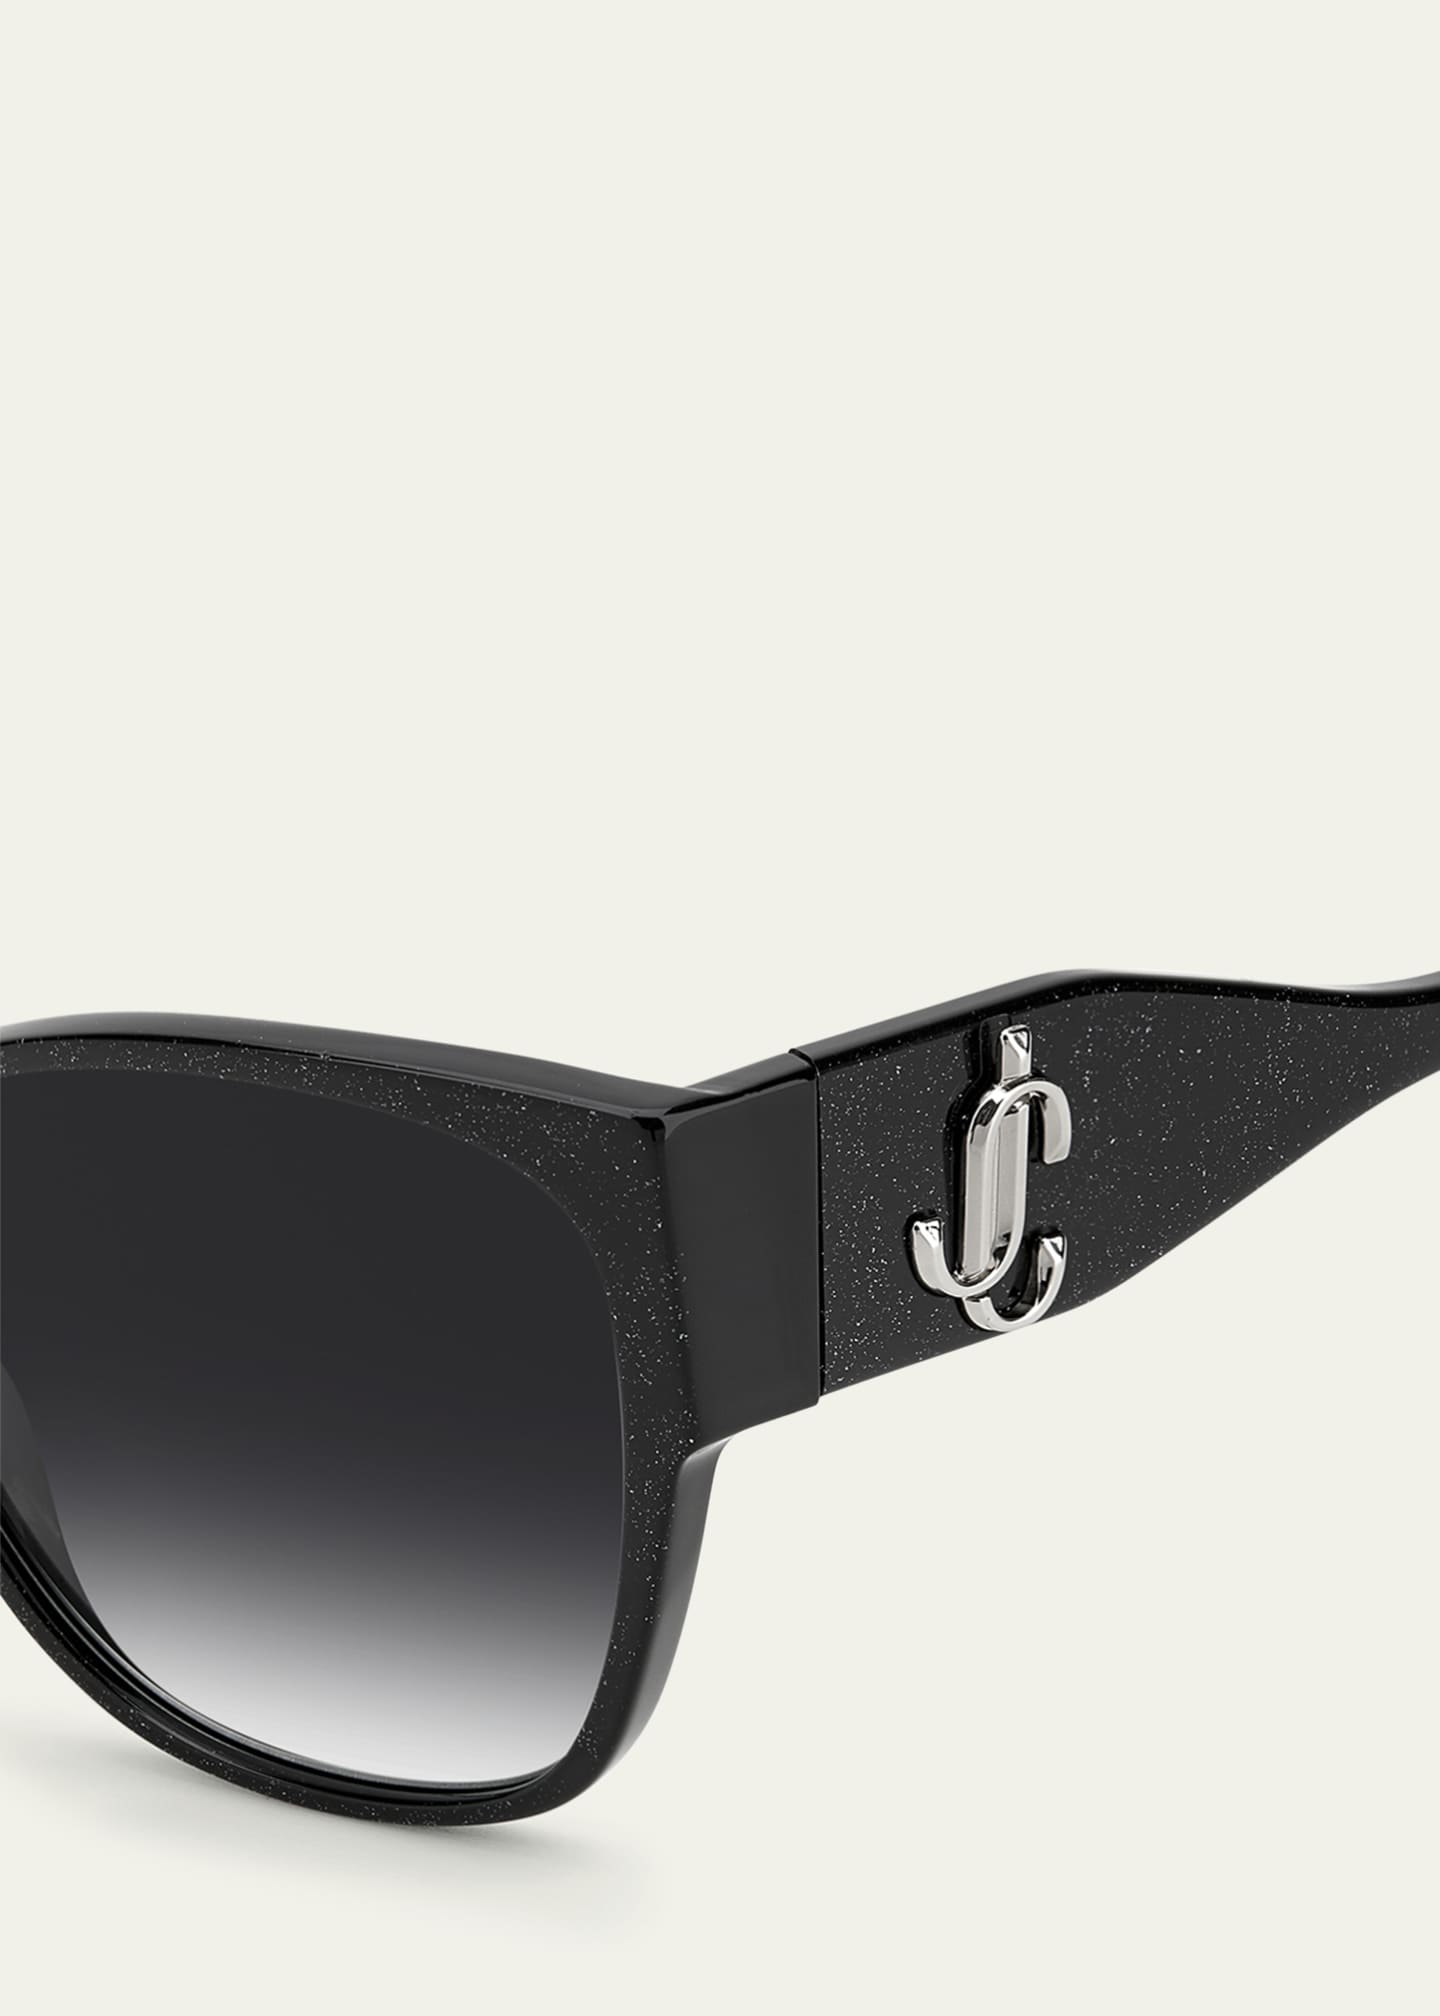 Chanel Black 5237 Tweed Sunglasses Chanel